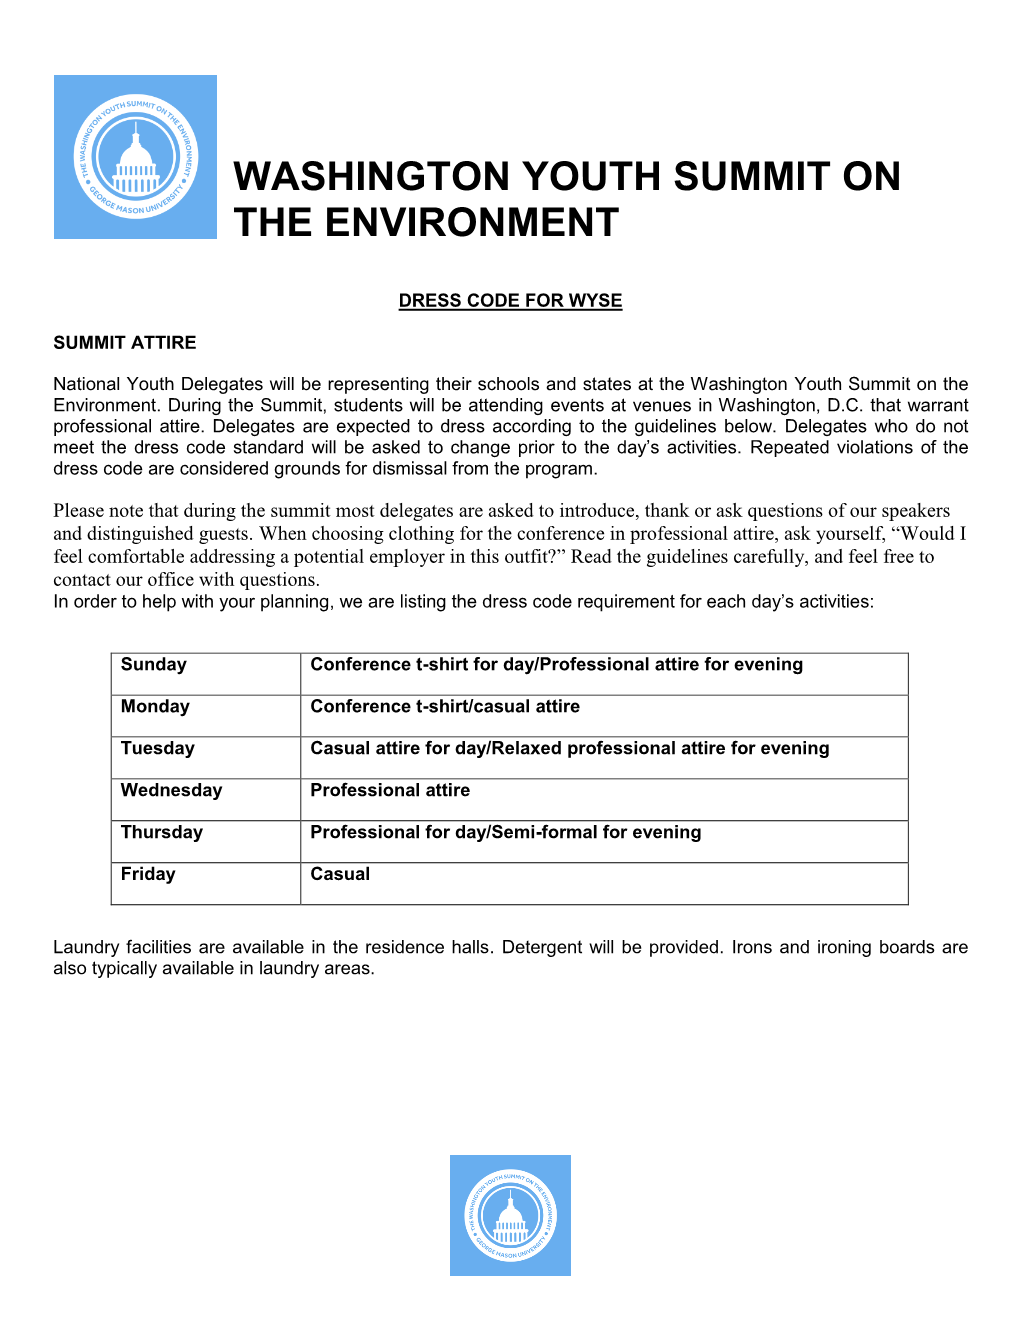 Washington Youth Summit on the Environment